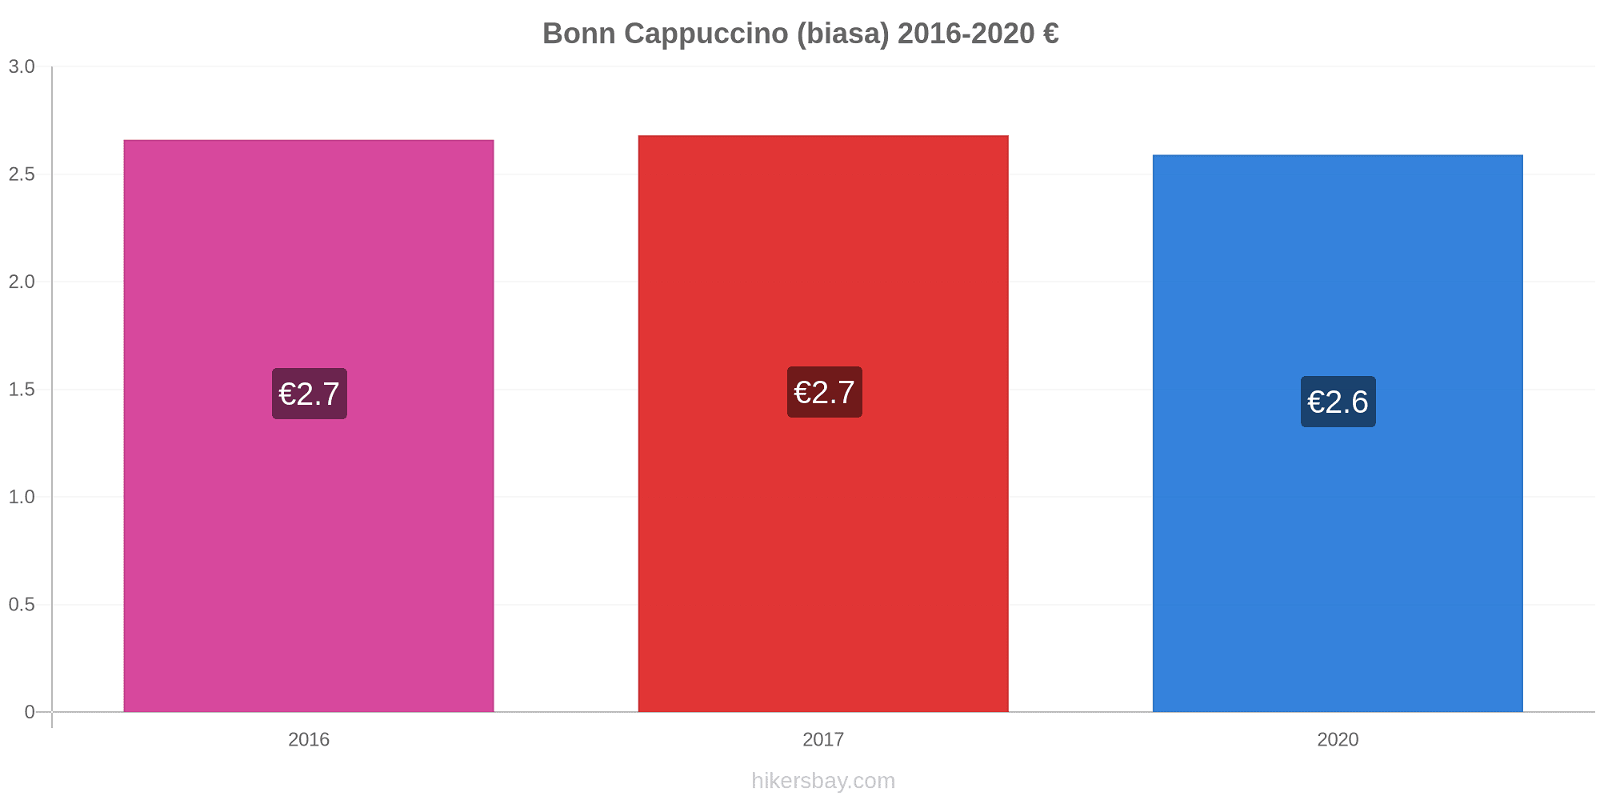 Bonn perubahan harga Cappuccino (biasa) hikersbay.com